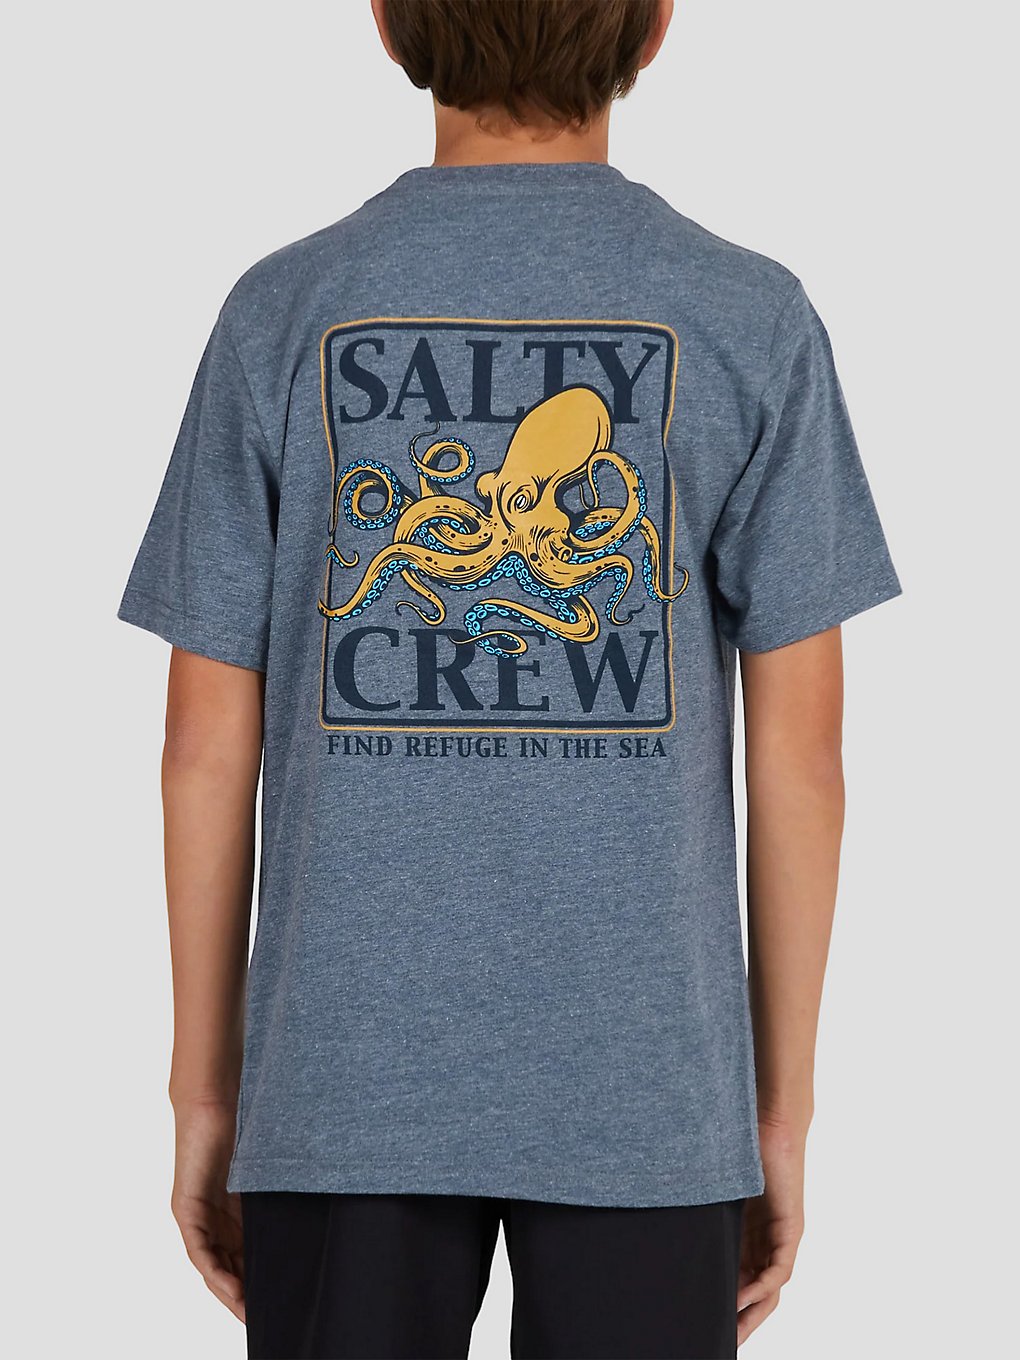 Salty Crew Ink Slinger T-Shirt athletic heather kaufen